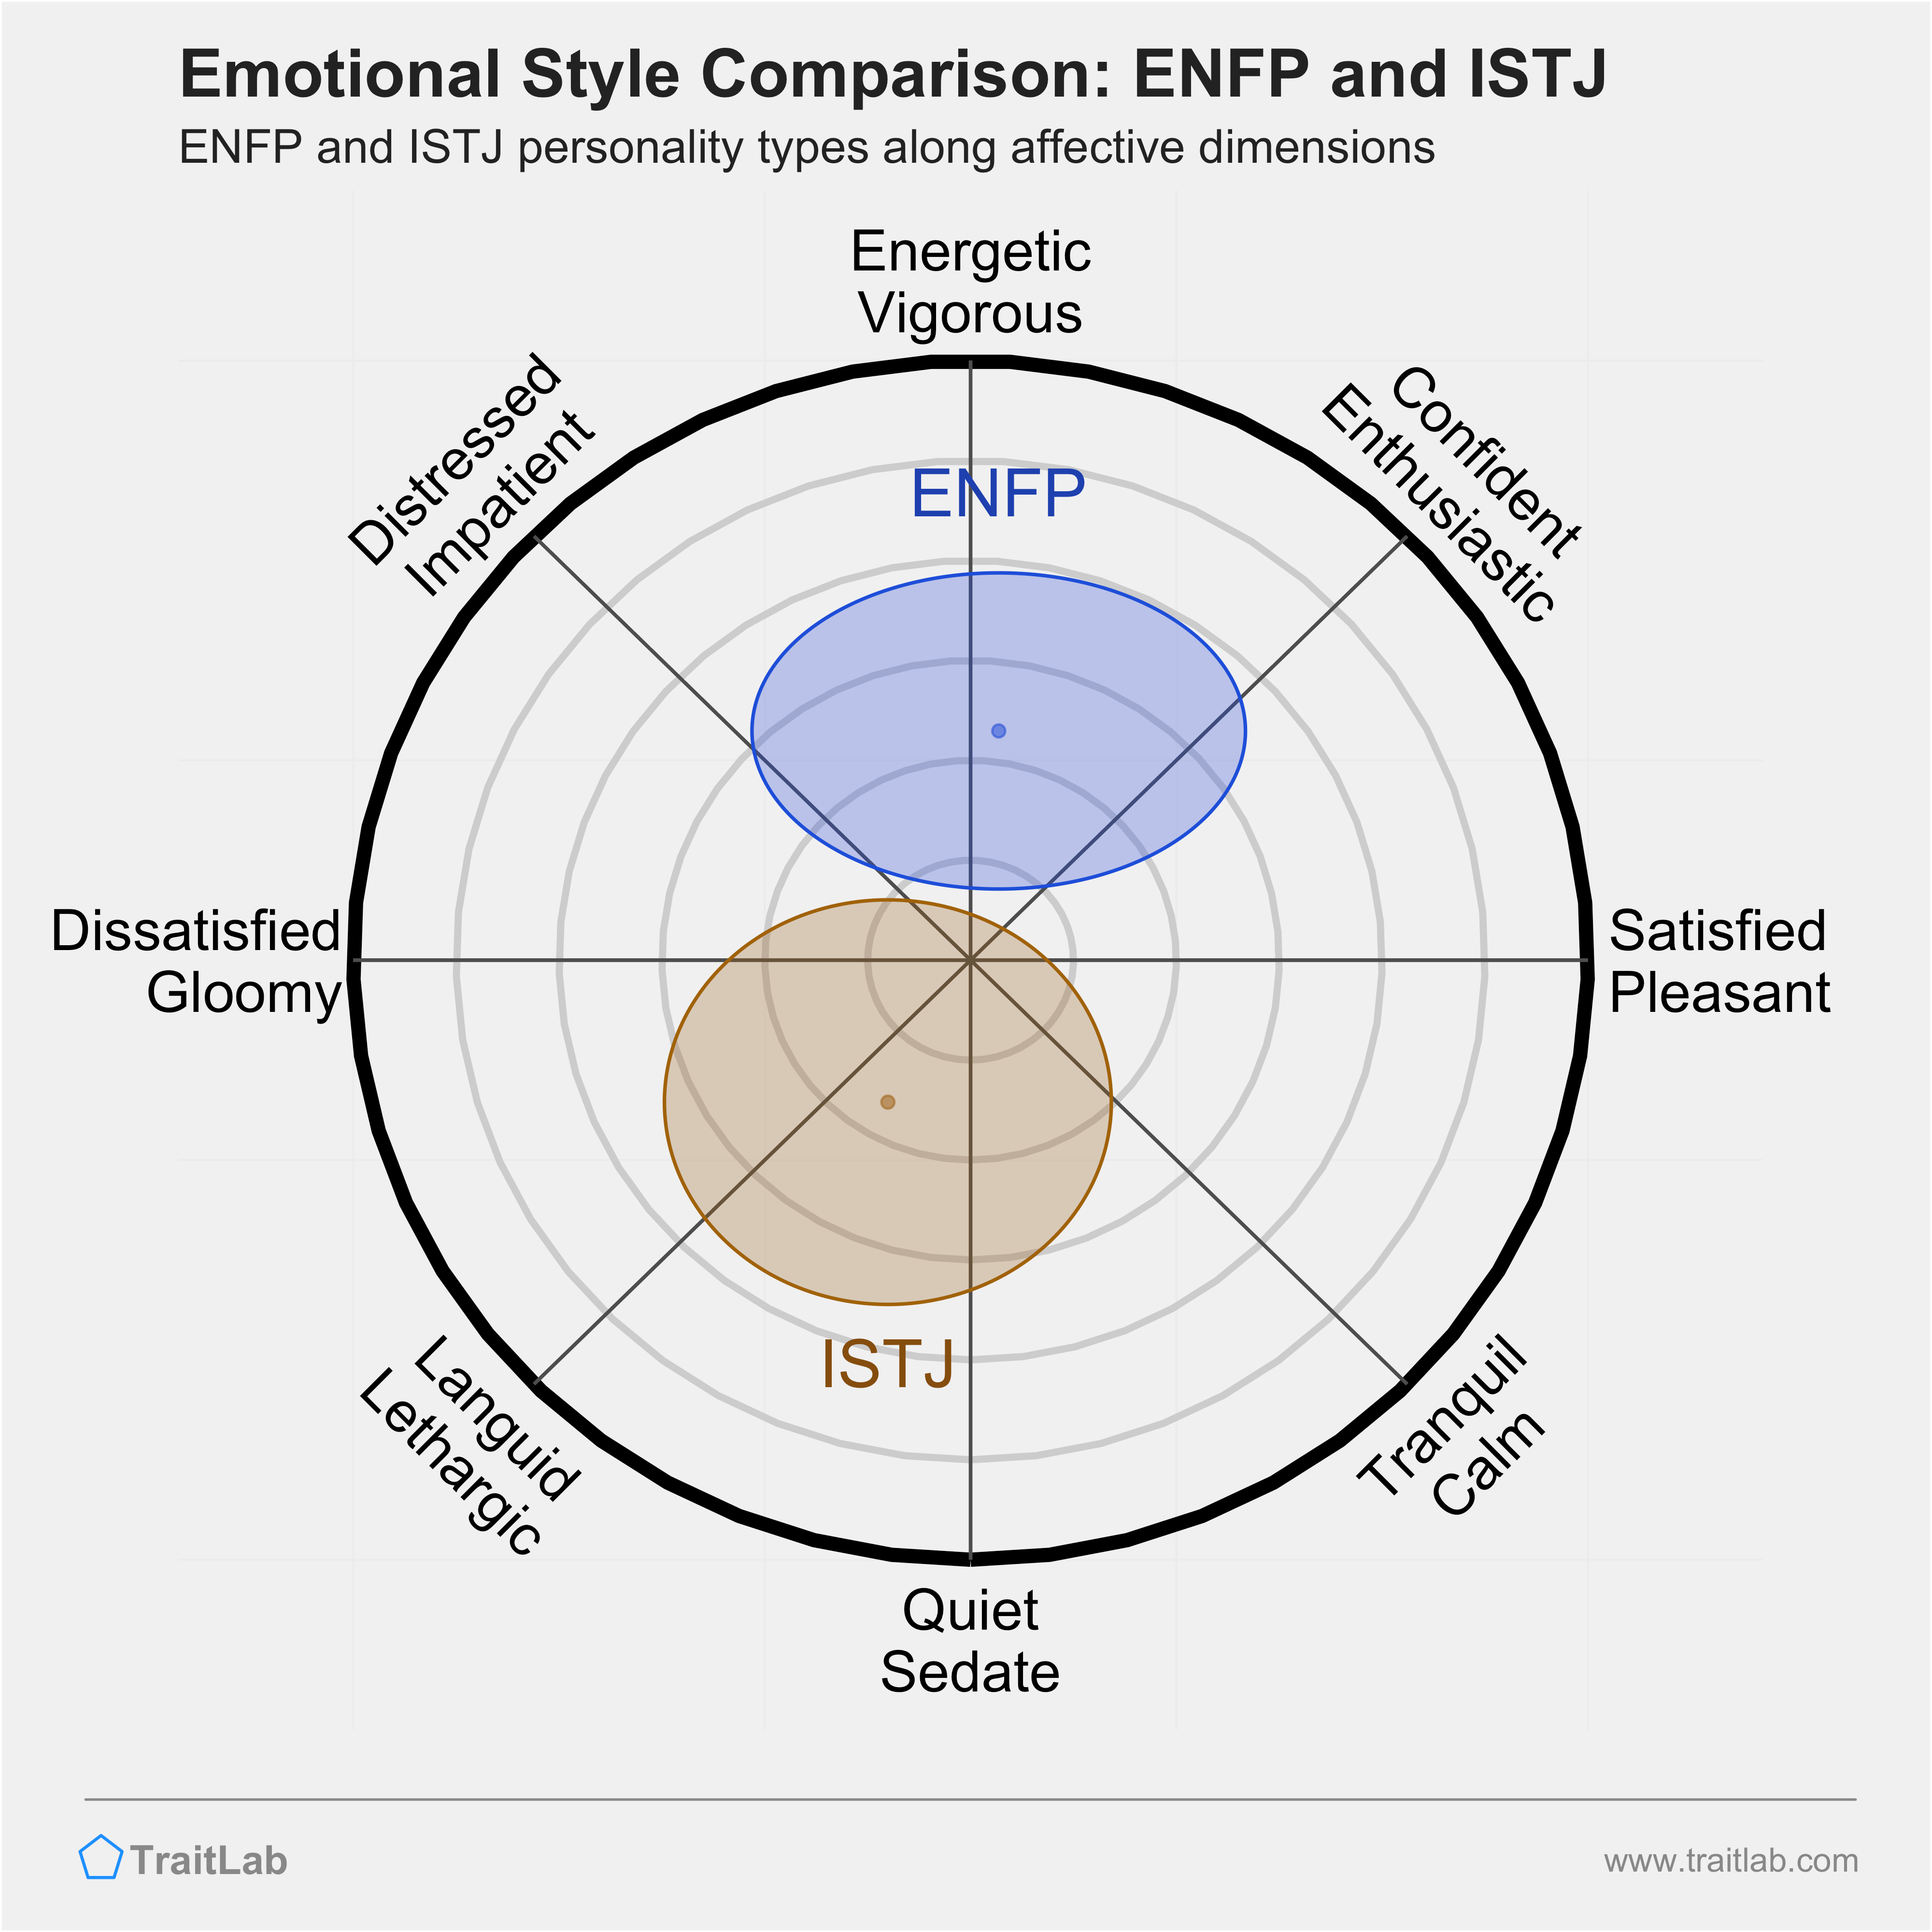 ENFP and ISTJ comparison across emotional (affective) dimensions